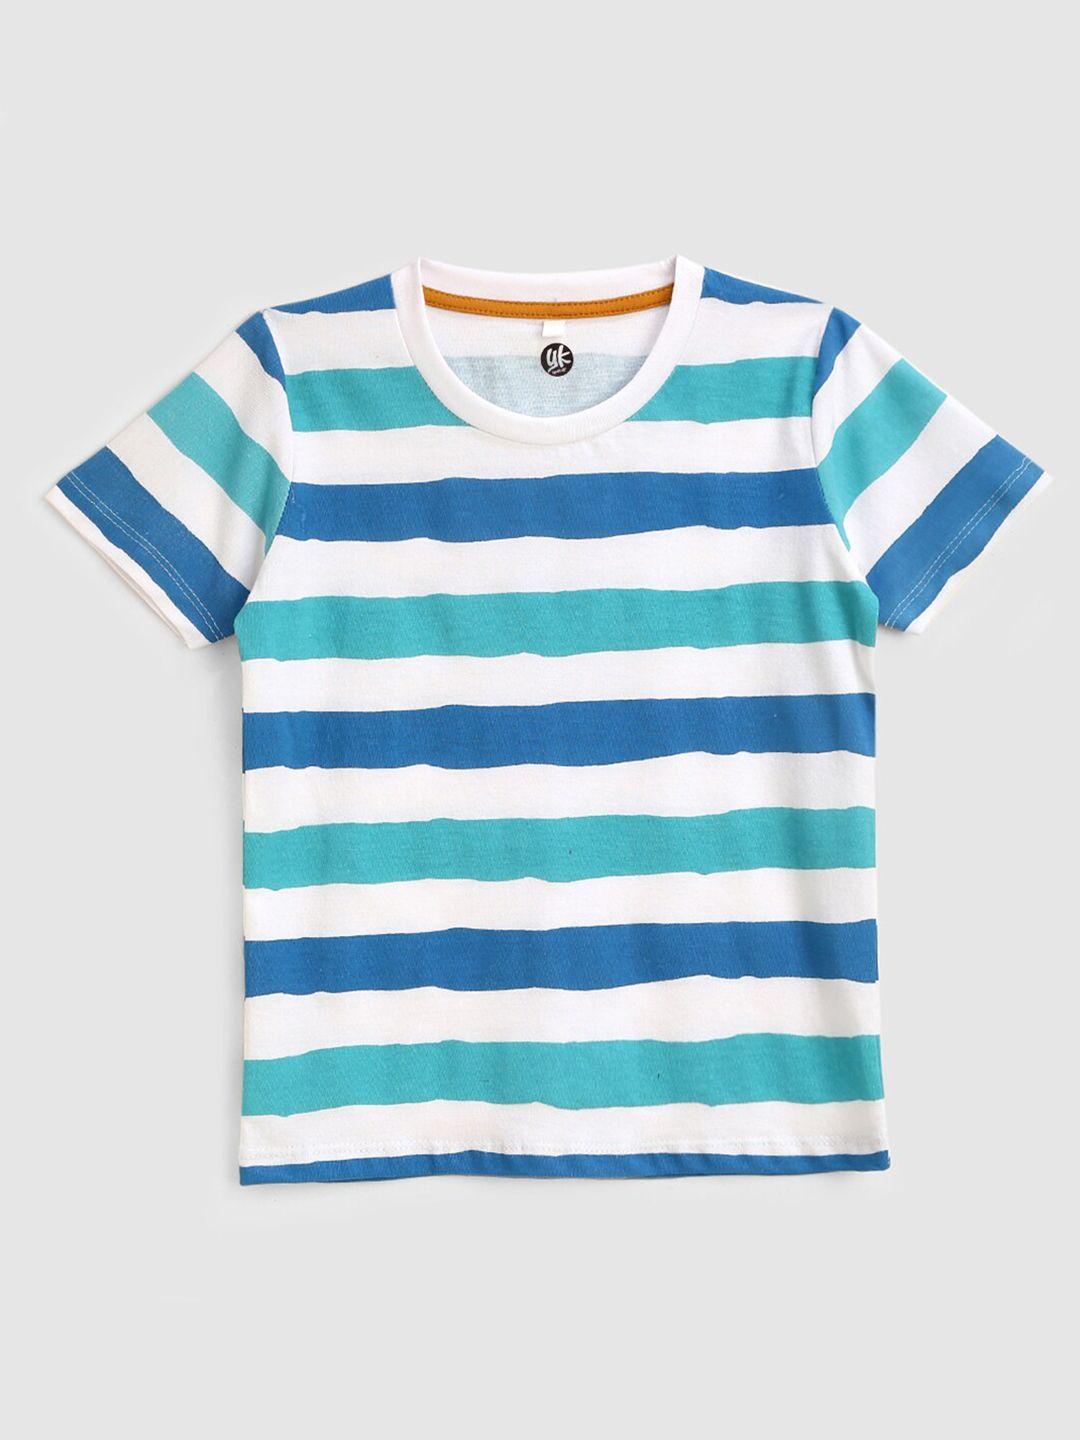 yk boys white & blue striped running cotton t-shirt